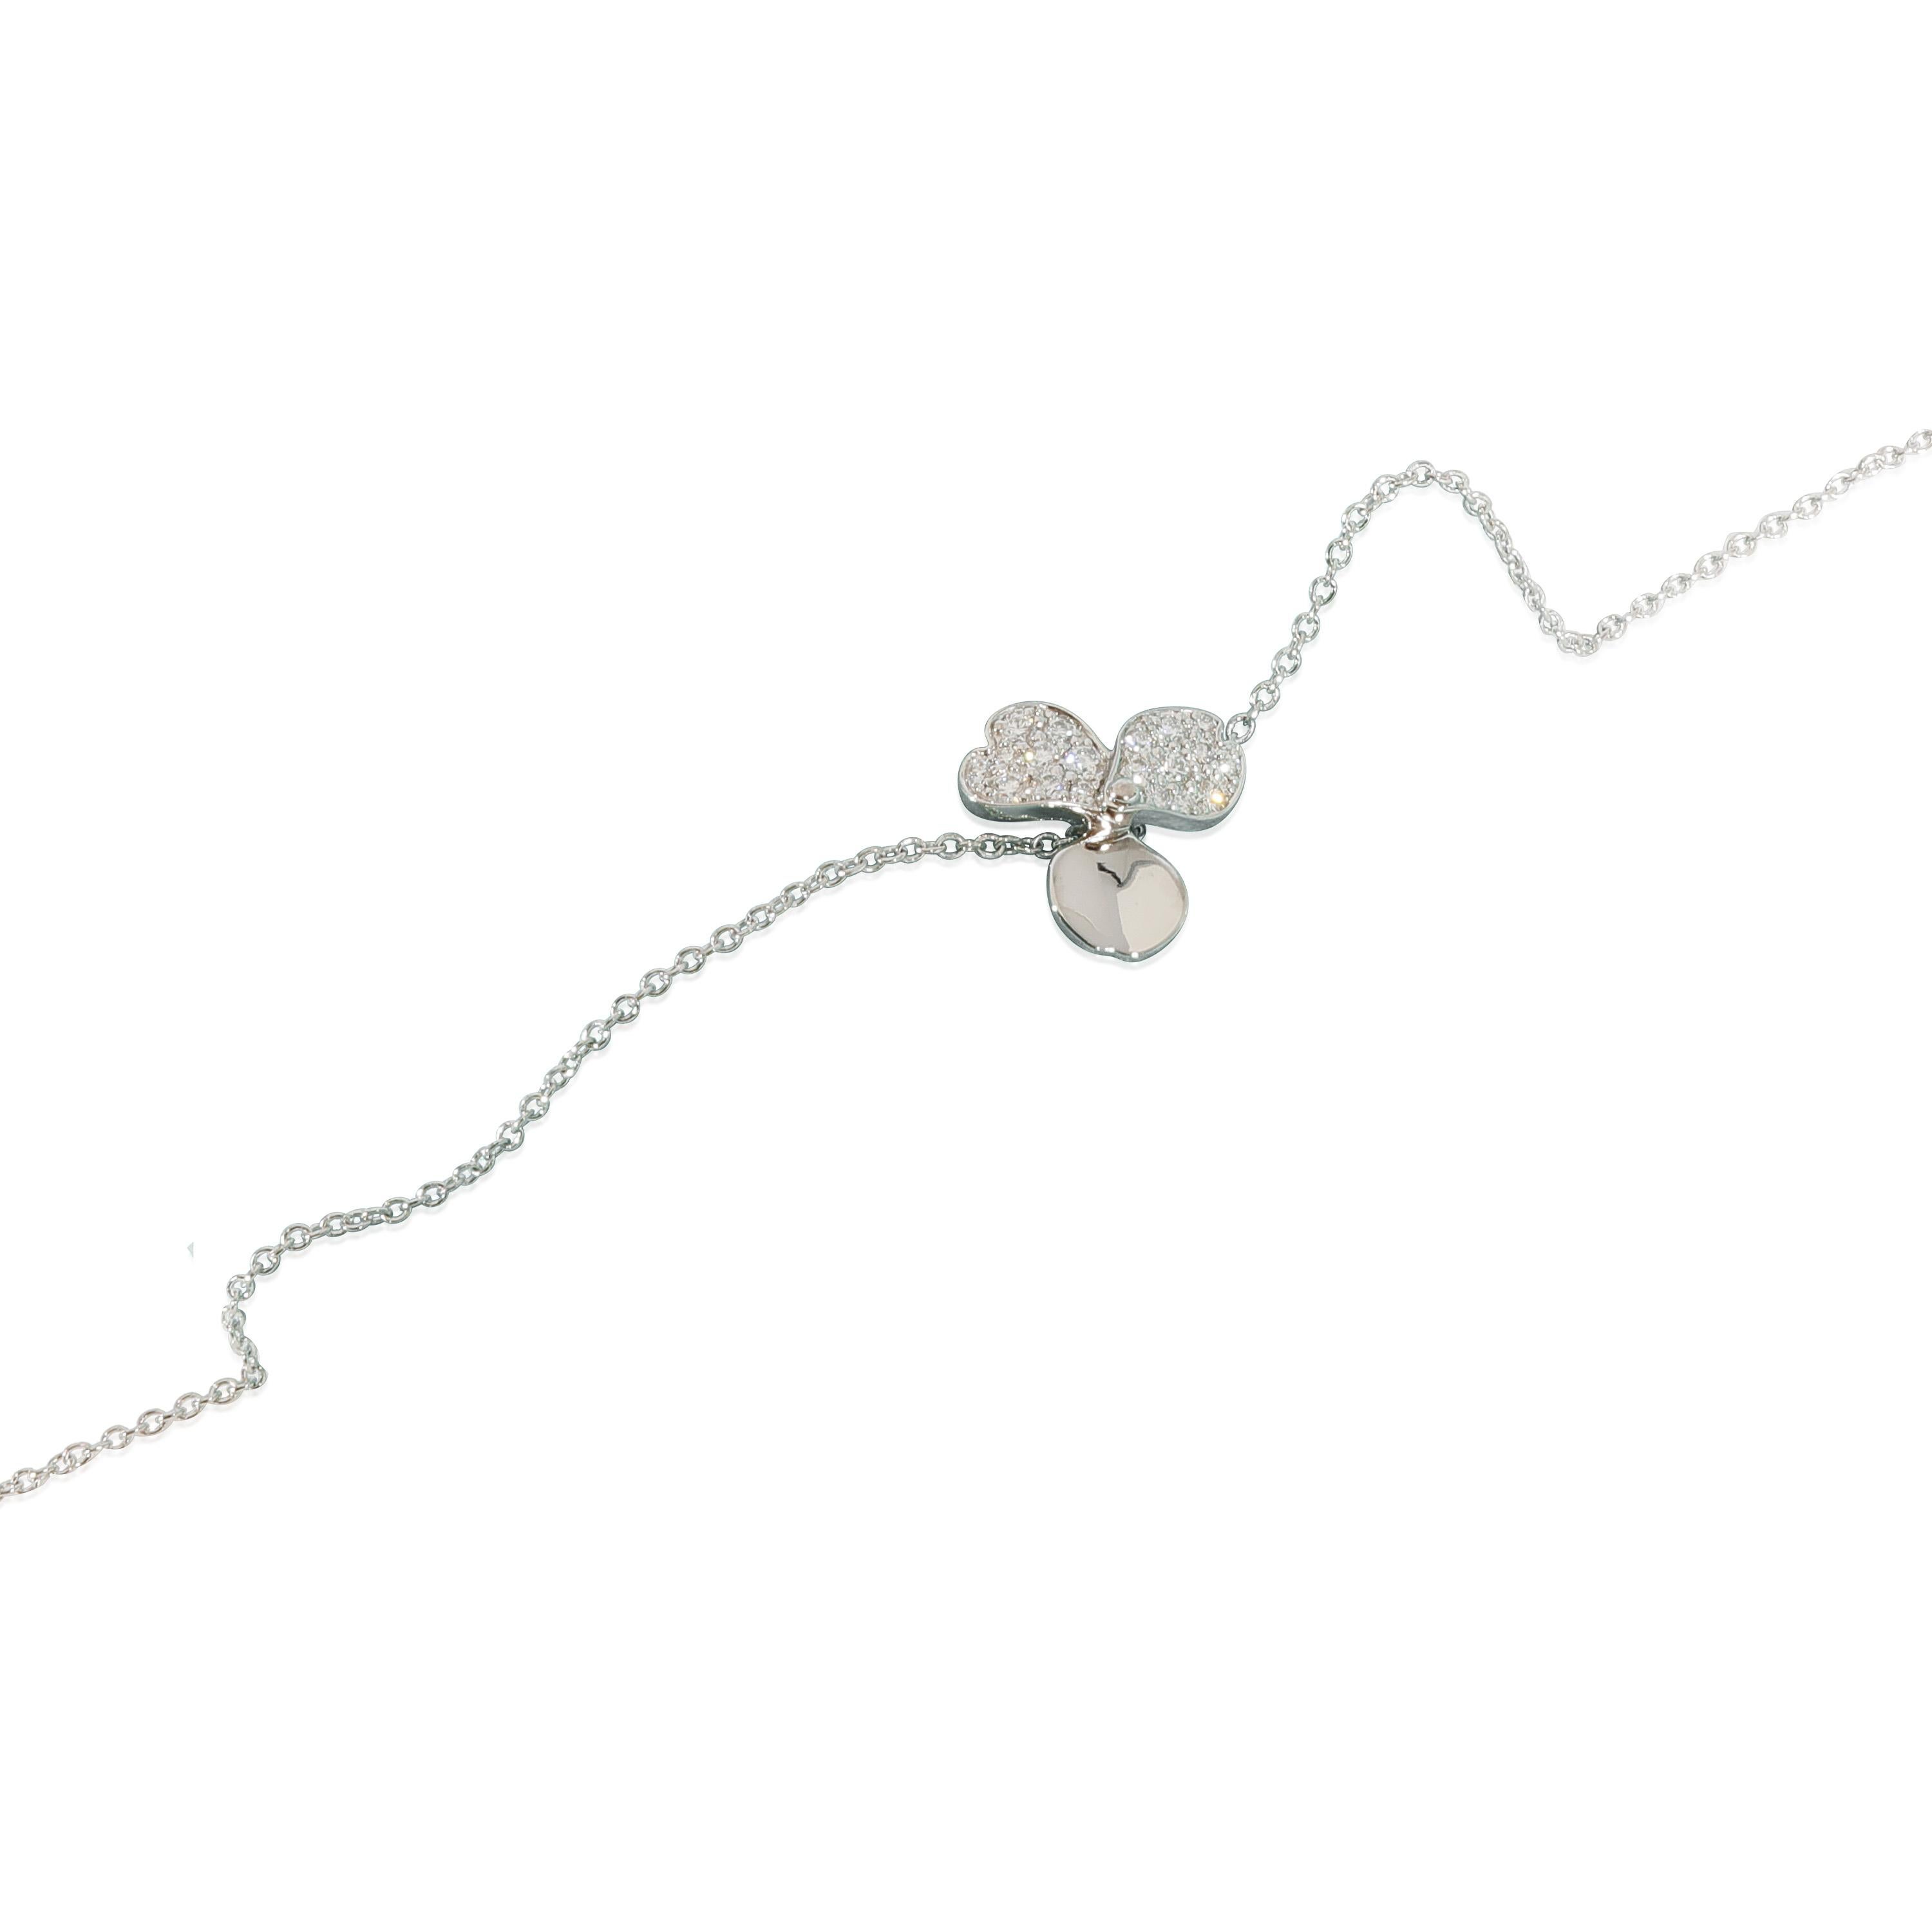 Tiffany & Co. Paper Flowers Diamond Bracelet in 950 Platinum 0.17 CTW

PRIMARY DETAILS
SKU: 124402
Listing Title: Tiffany & Co. Paper Flowers Diamond Bracelet in 950 Platinum 0.17 CTW
Condition Description: Retails for 2715 USD. In excellent